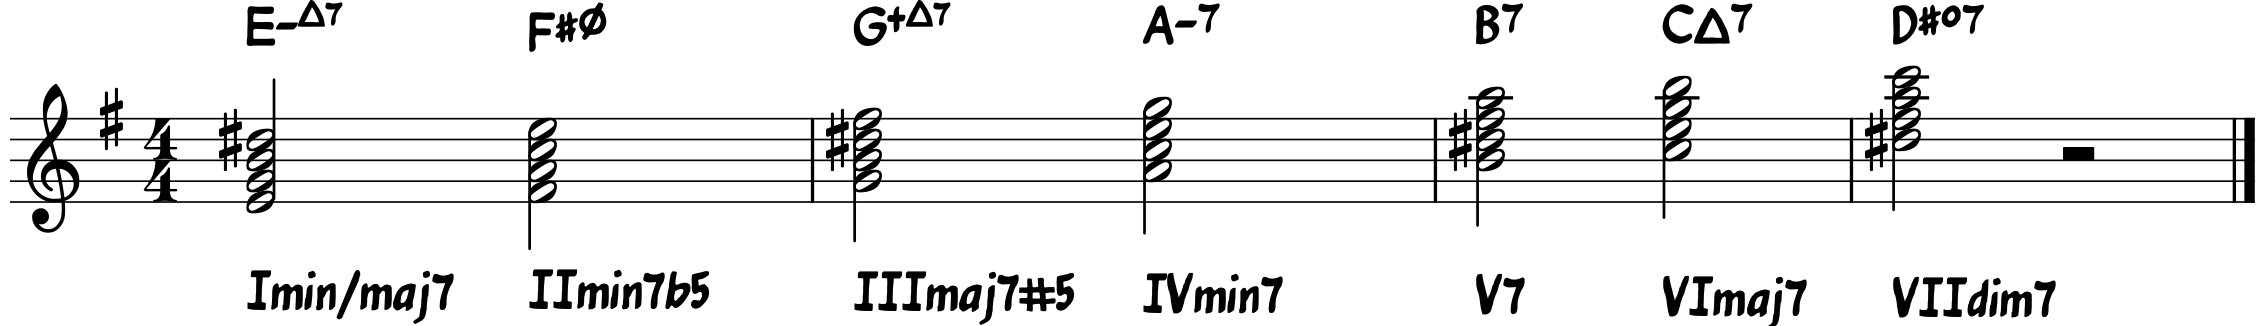 formula harmonic minor scale